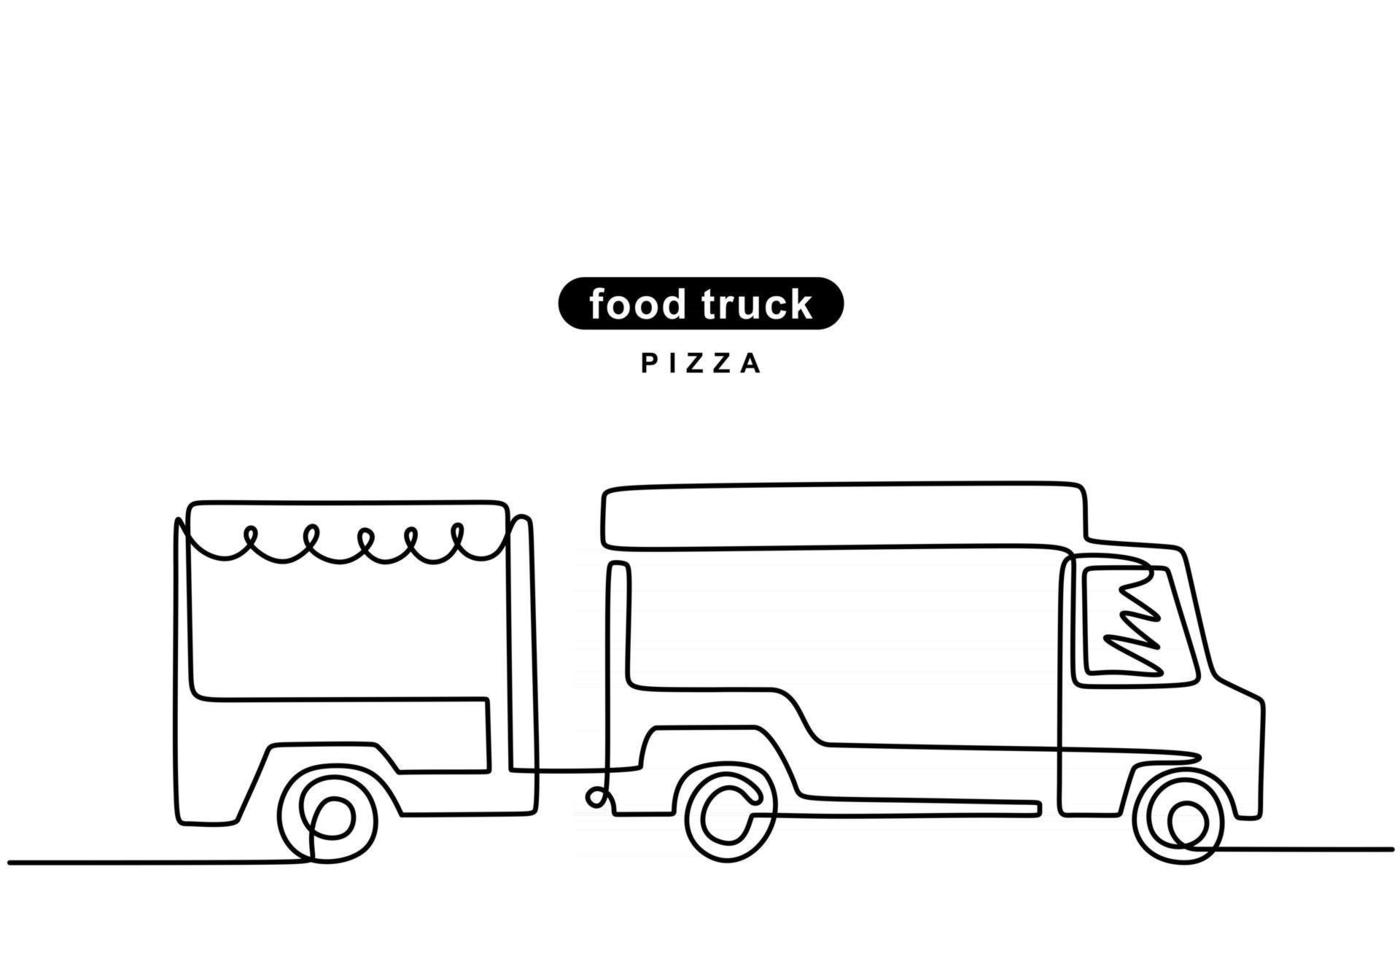 línea continua única de camión de comida de pizza. camión de pizza en estilo de una línea aislado sobre fondo blanco. vector